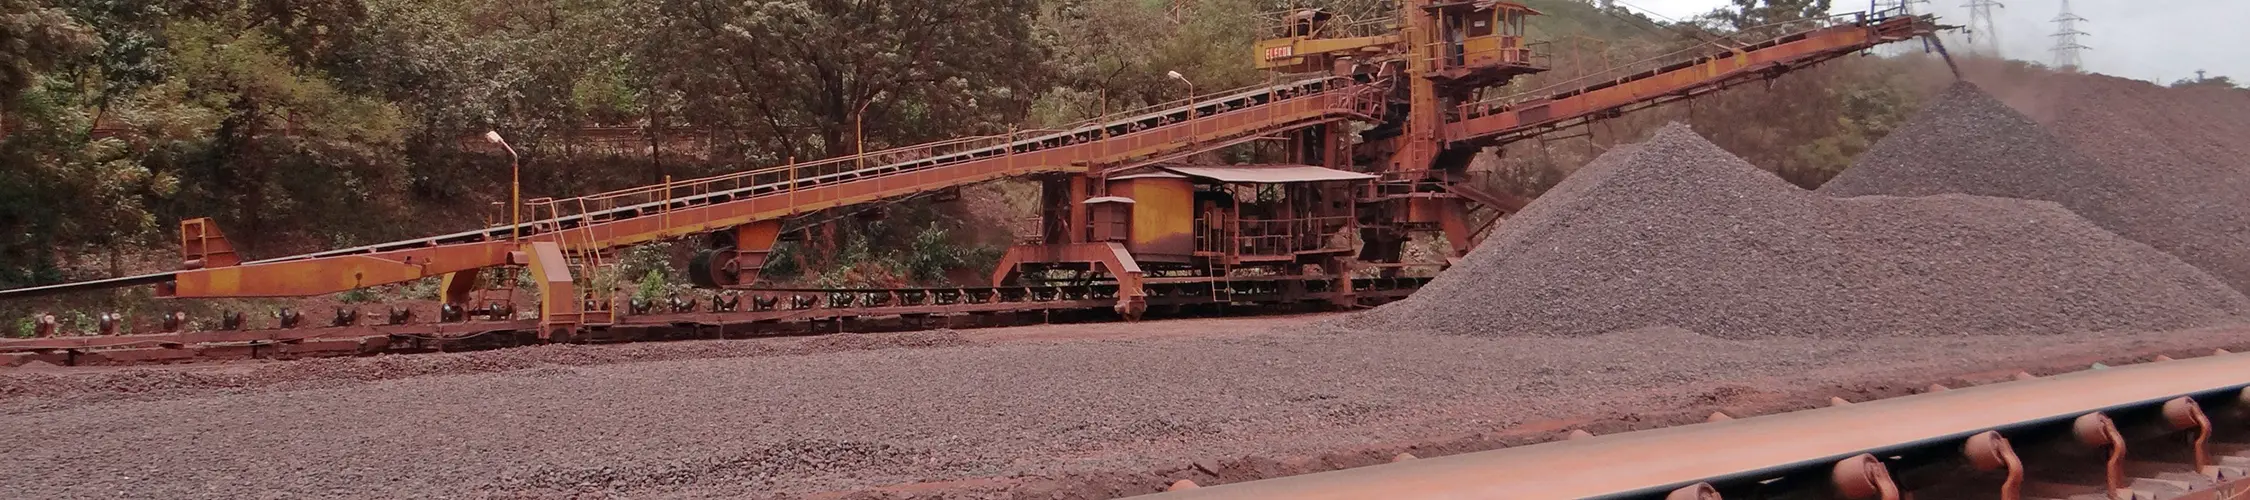 mining belt conveyors